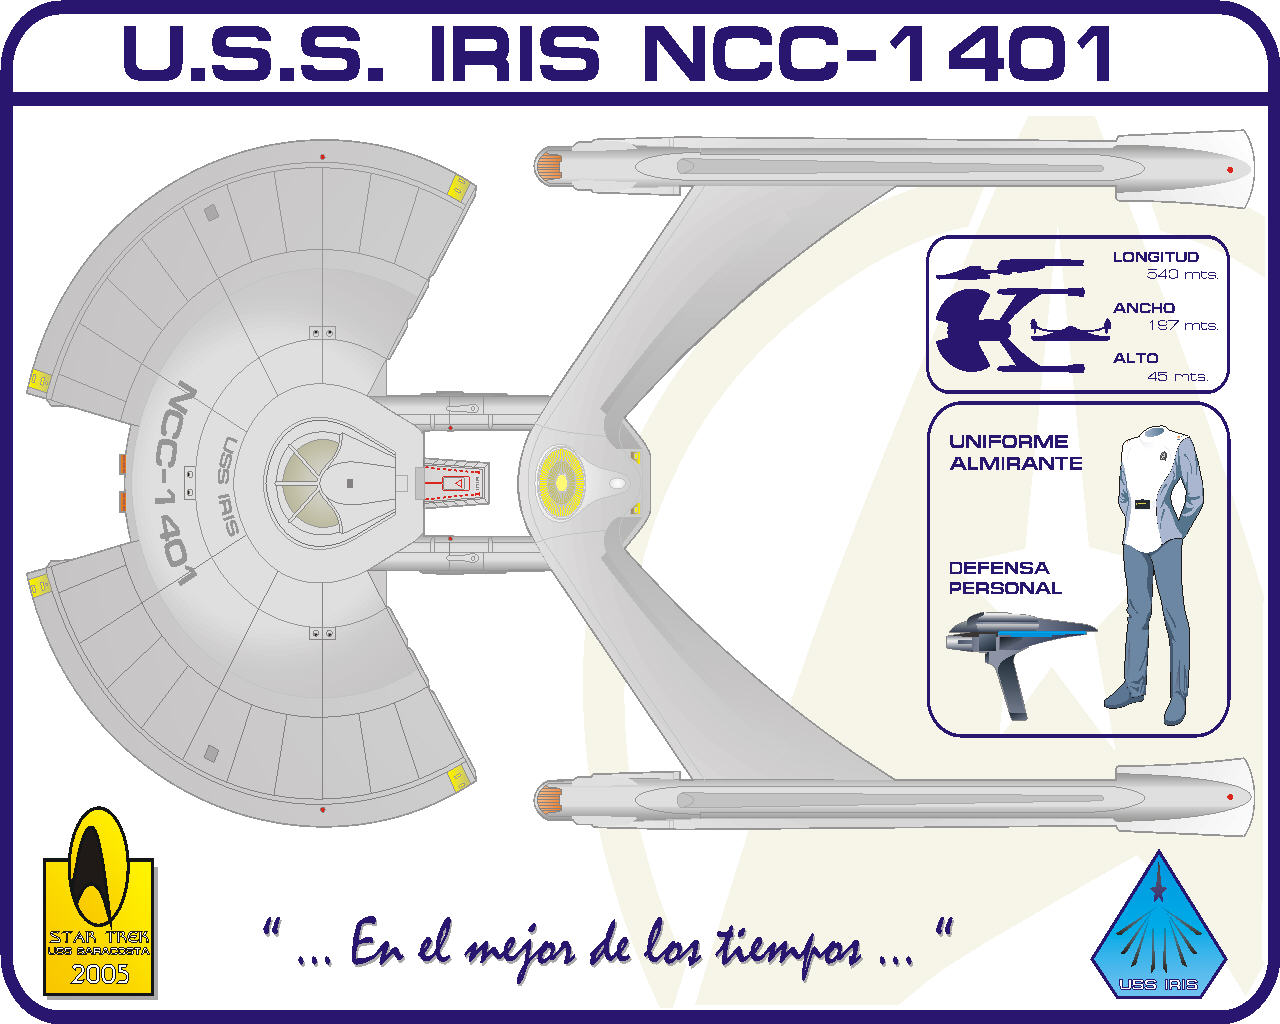 http://www.cygnus-x1.net/links/lcars/blueprints/saracosta/uss-irisncc-1401-color.jpg